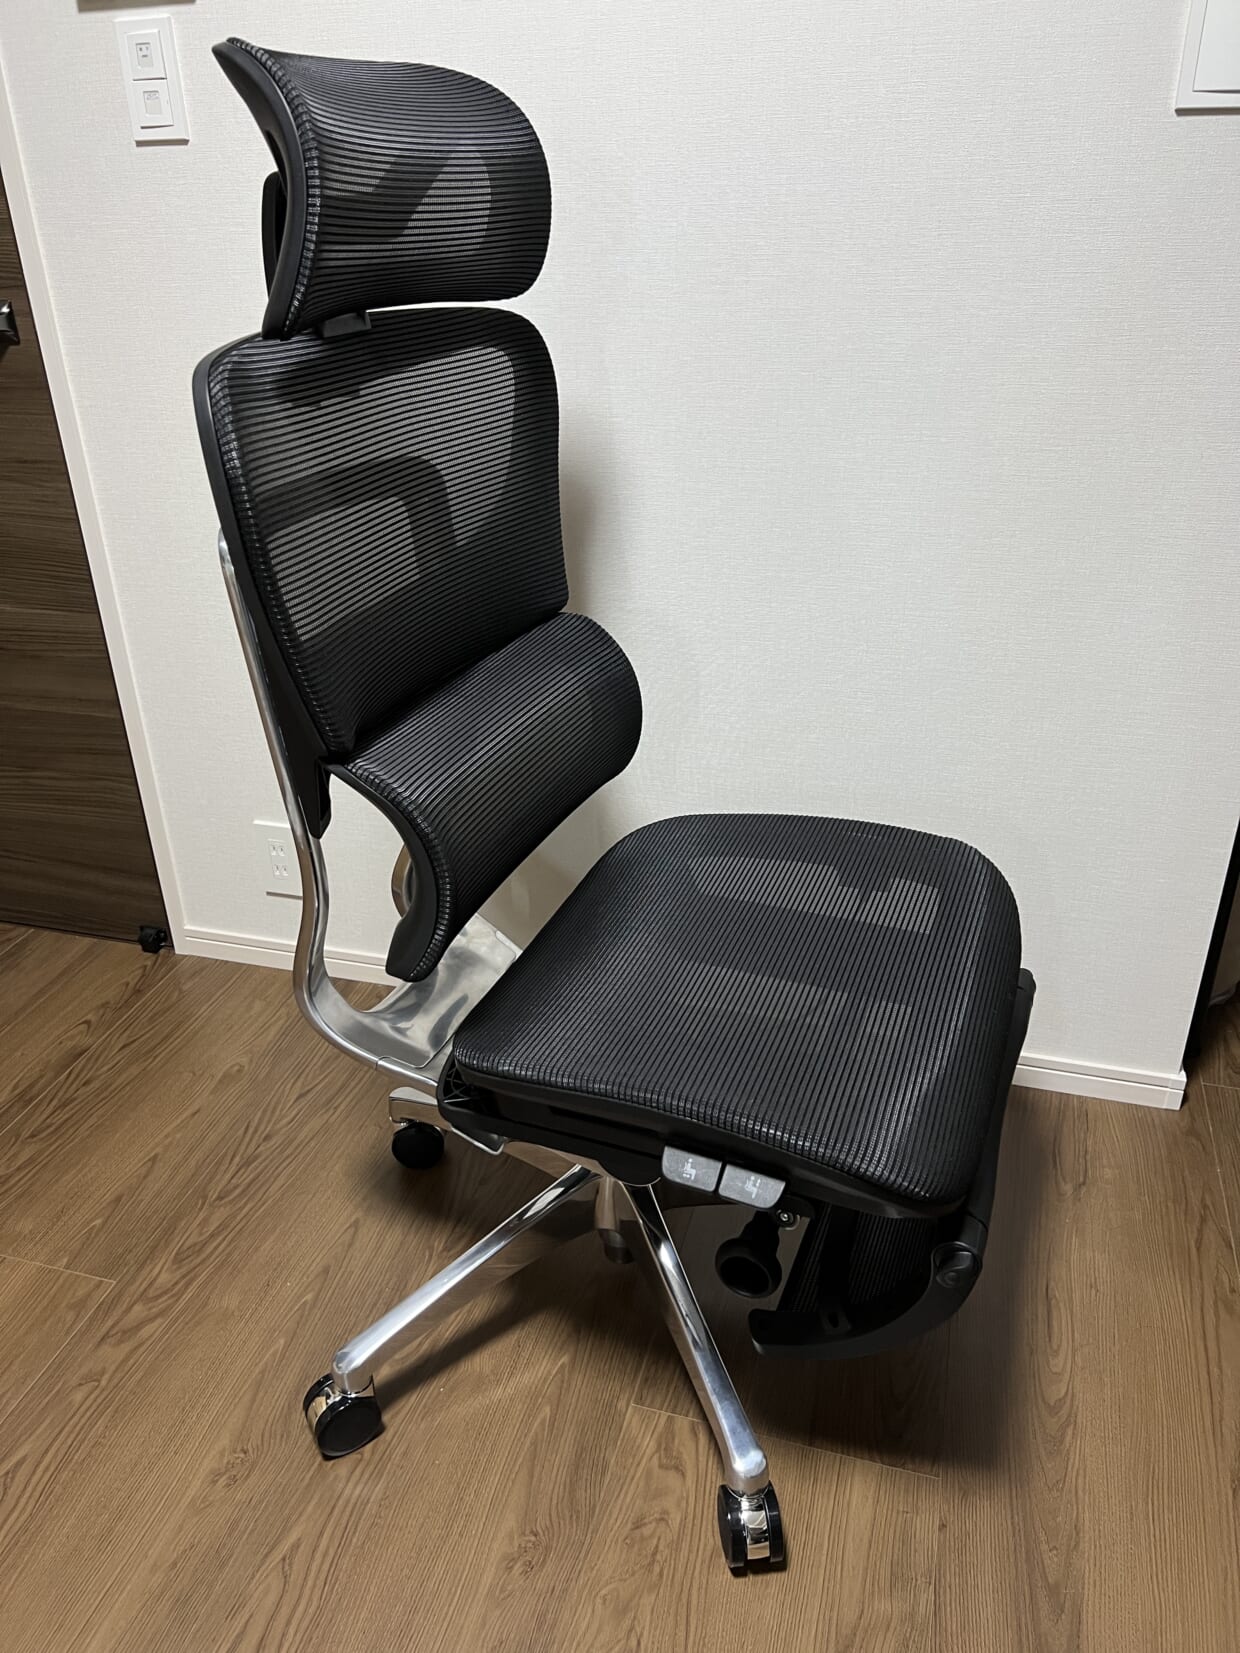 COFO Chair Premium レビュー！中価格帯で高級チェア並みの機能がいい 